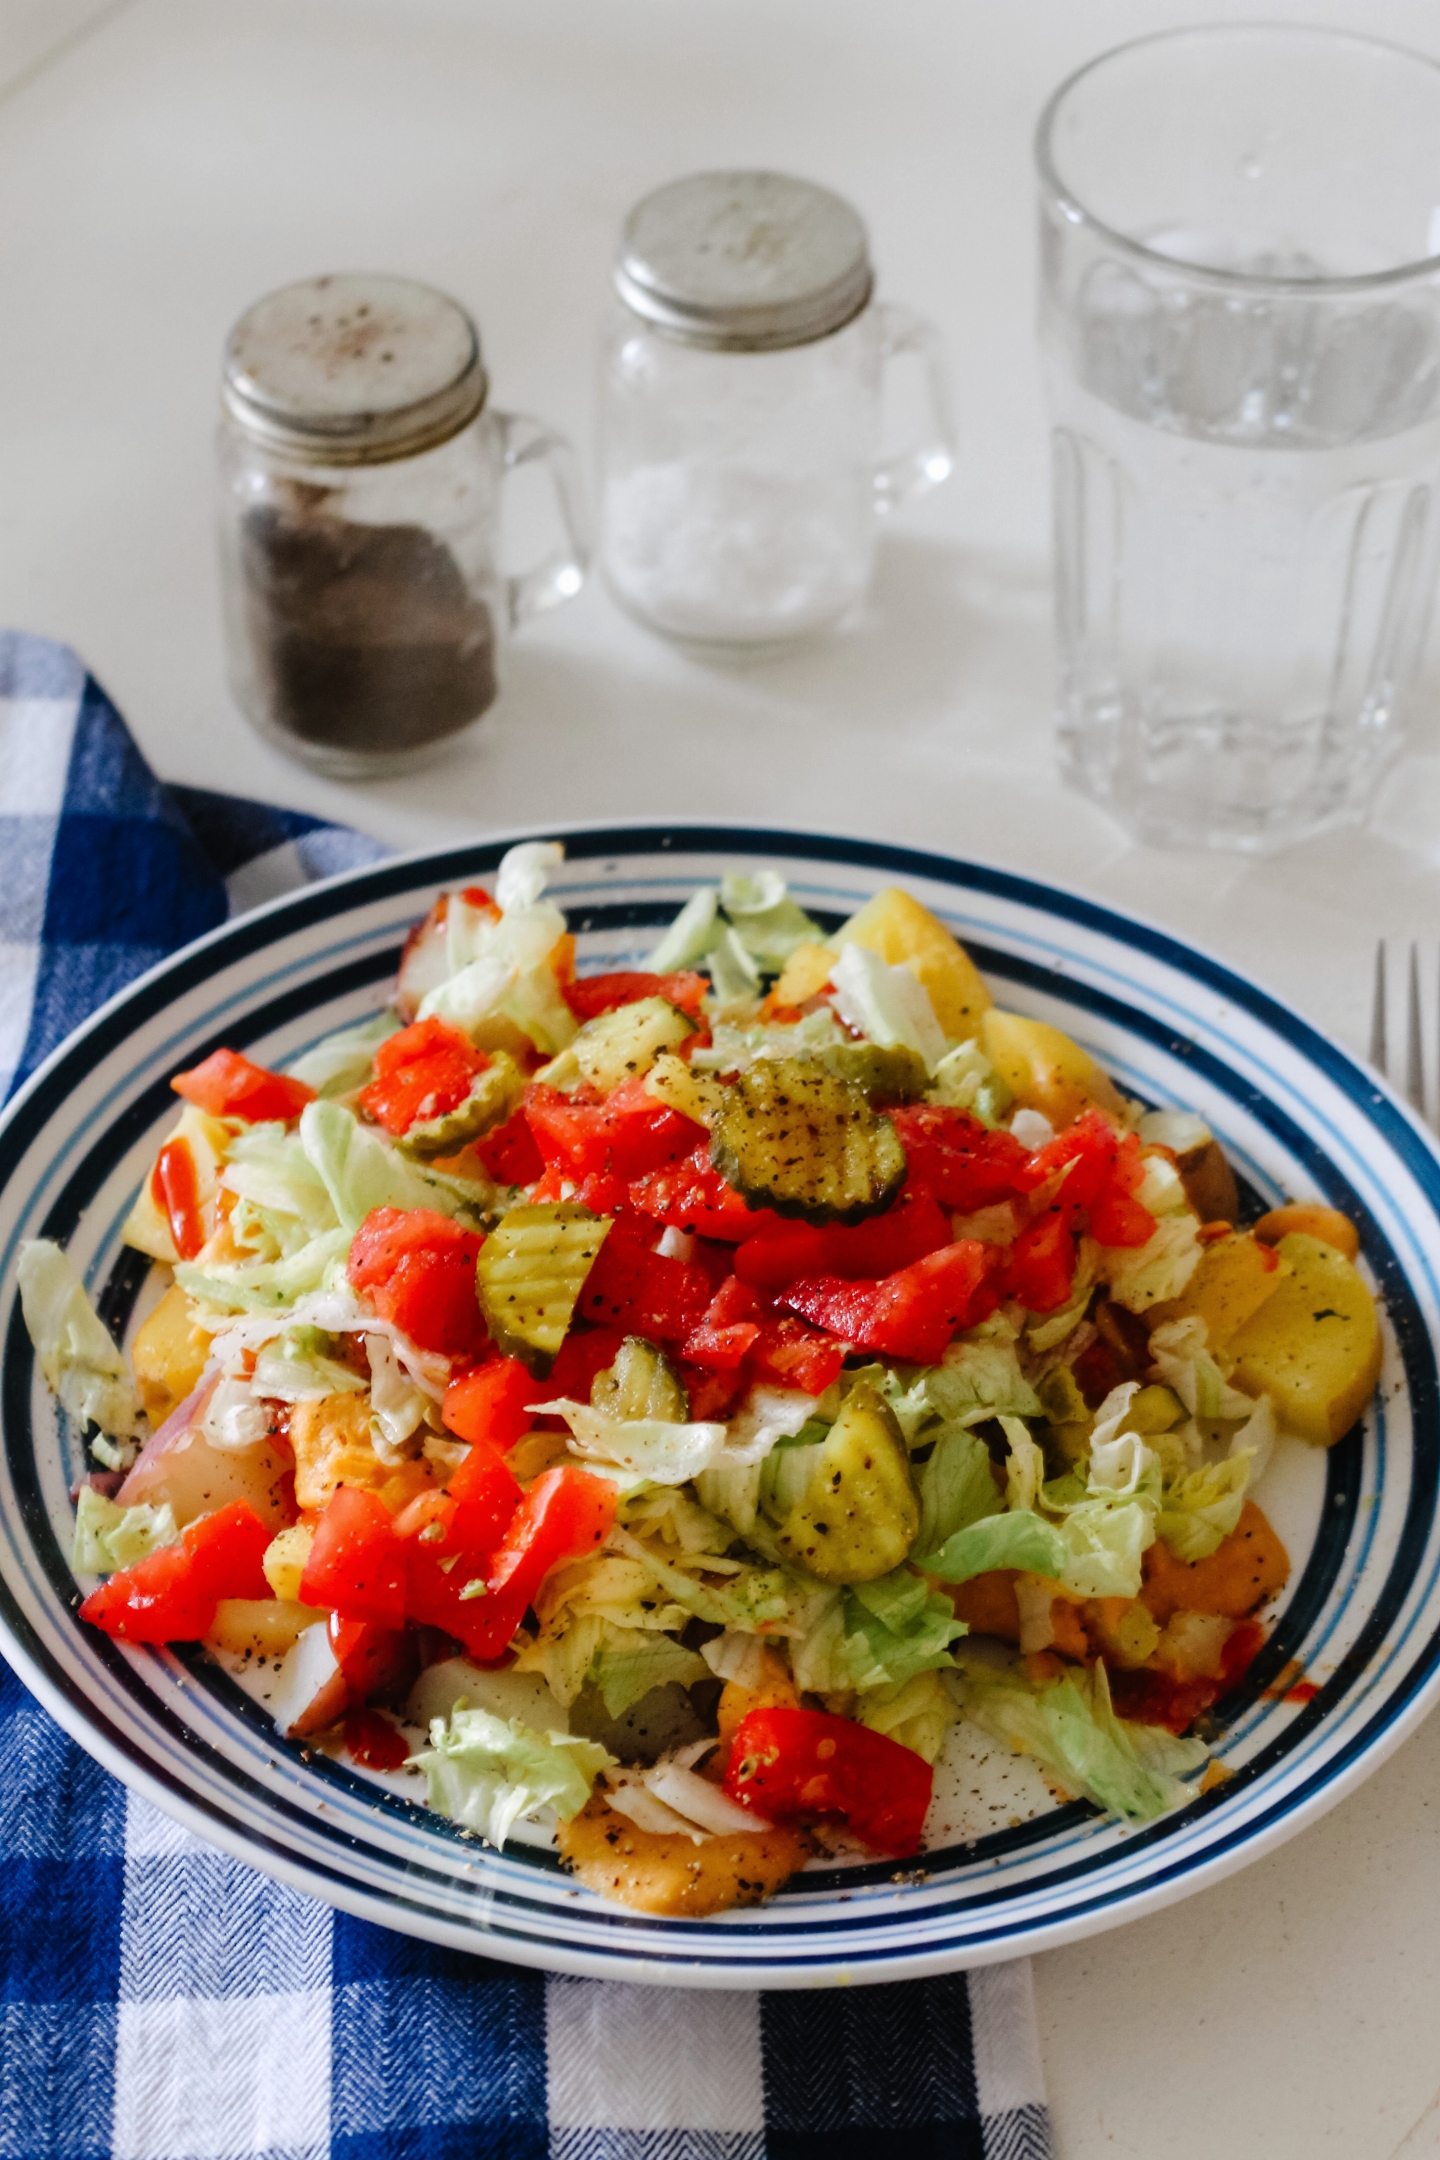 PLT - Potato, Lettuce, and Tomato (Starch Solution diet)